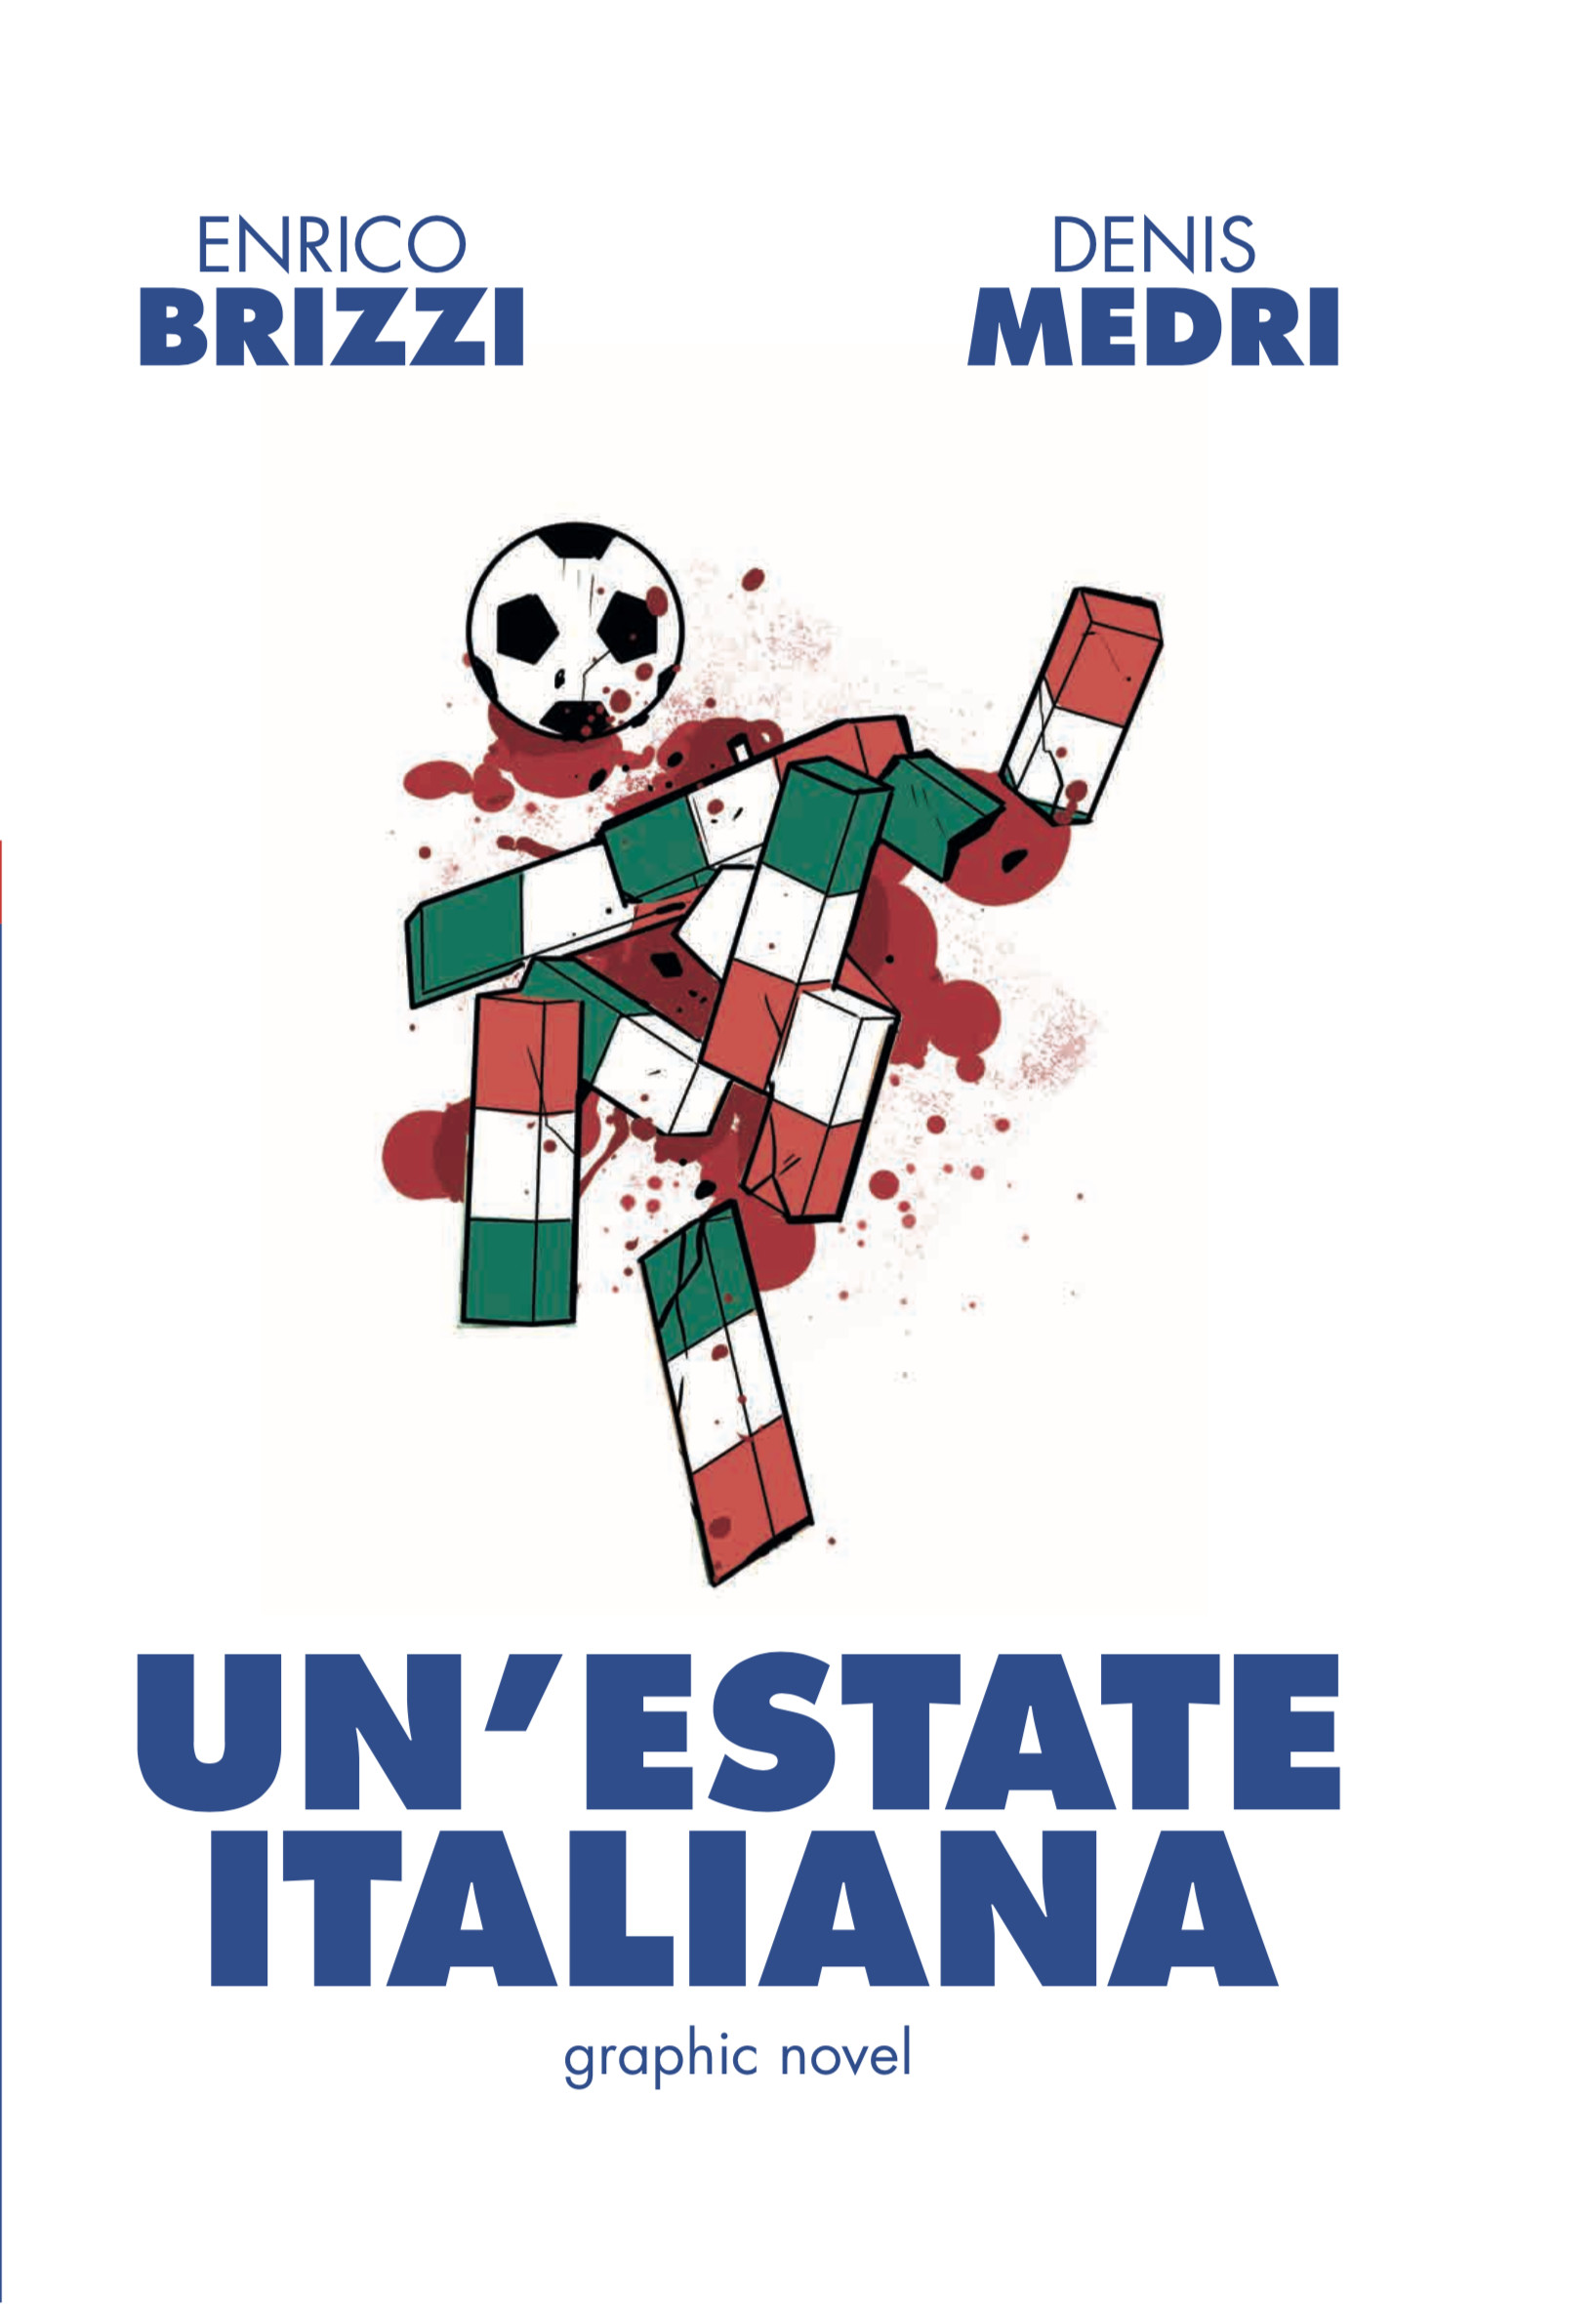 Denis Medri - Un'Estate Italiana graphic novel (Panini Comics)